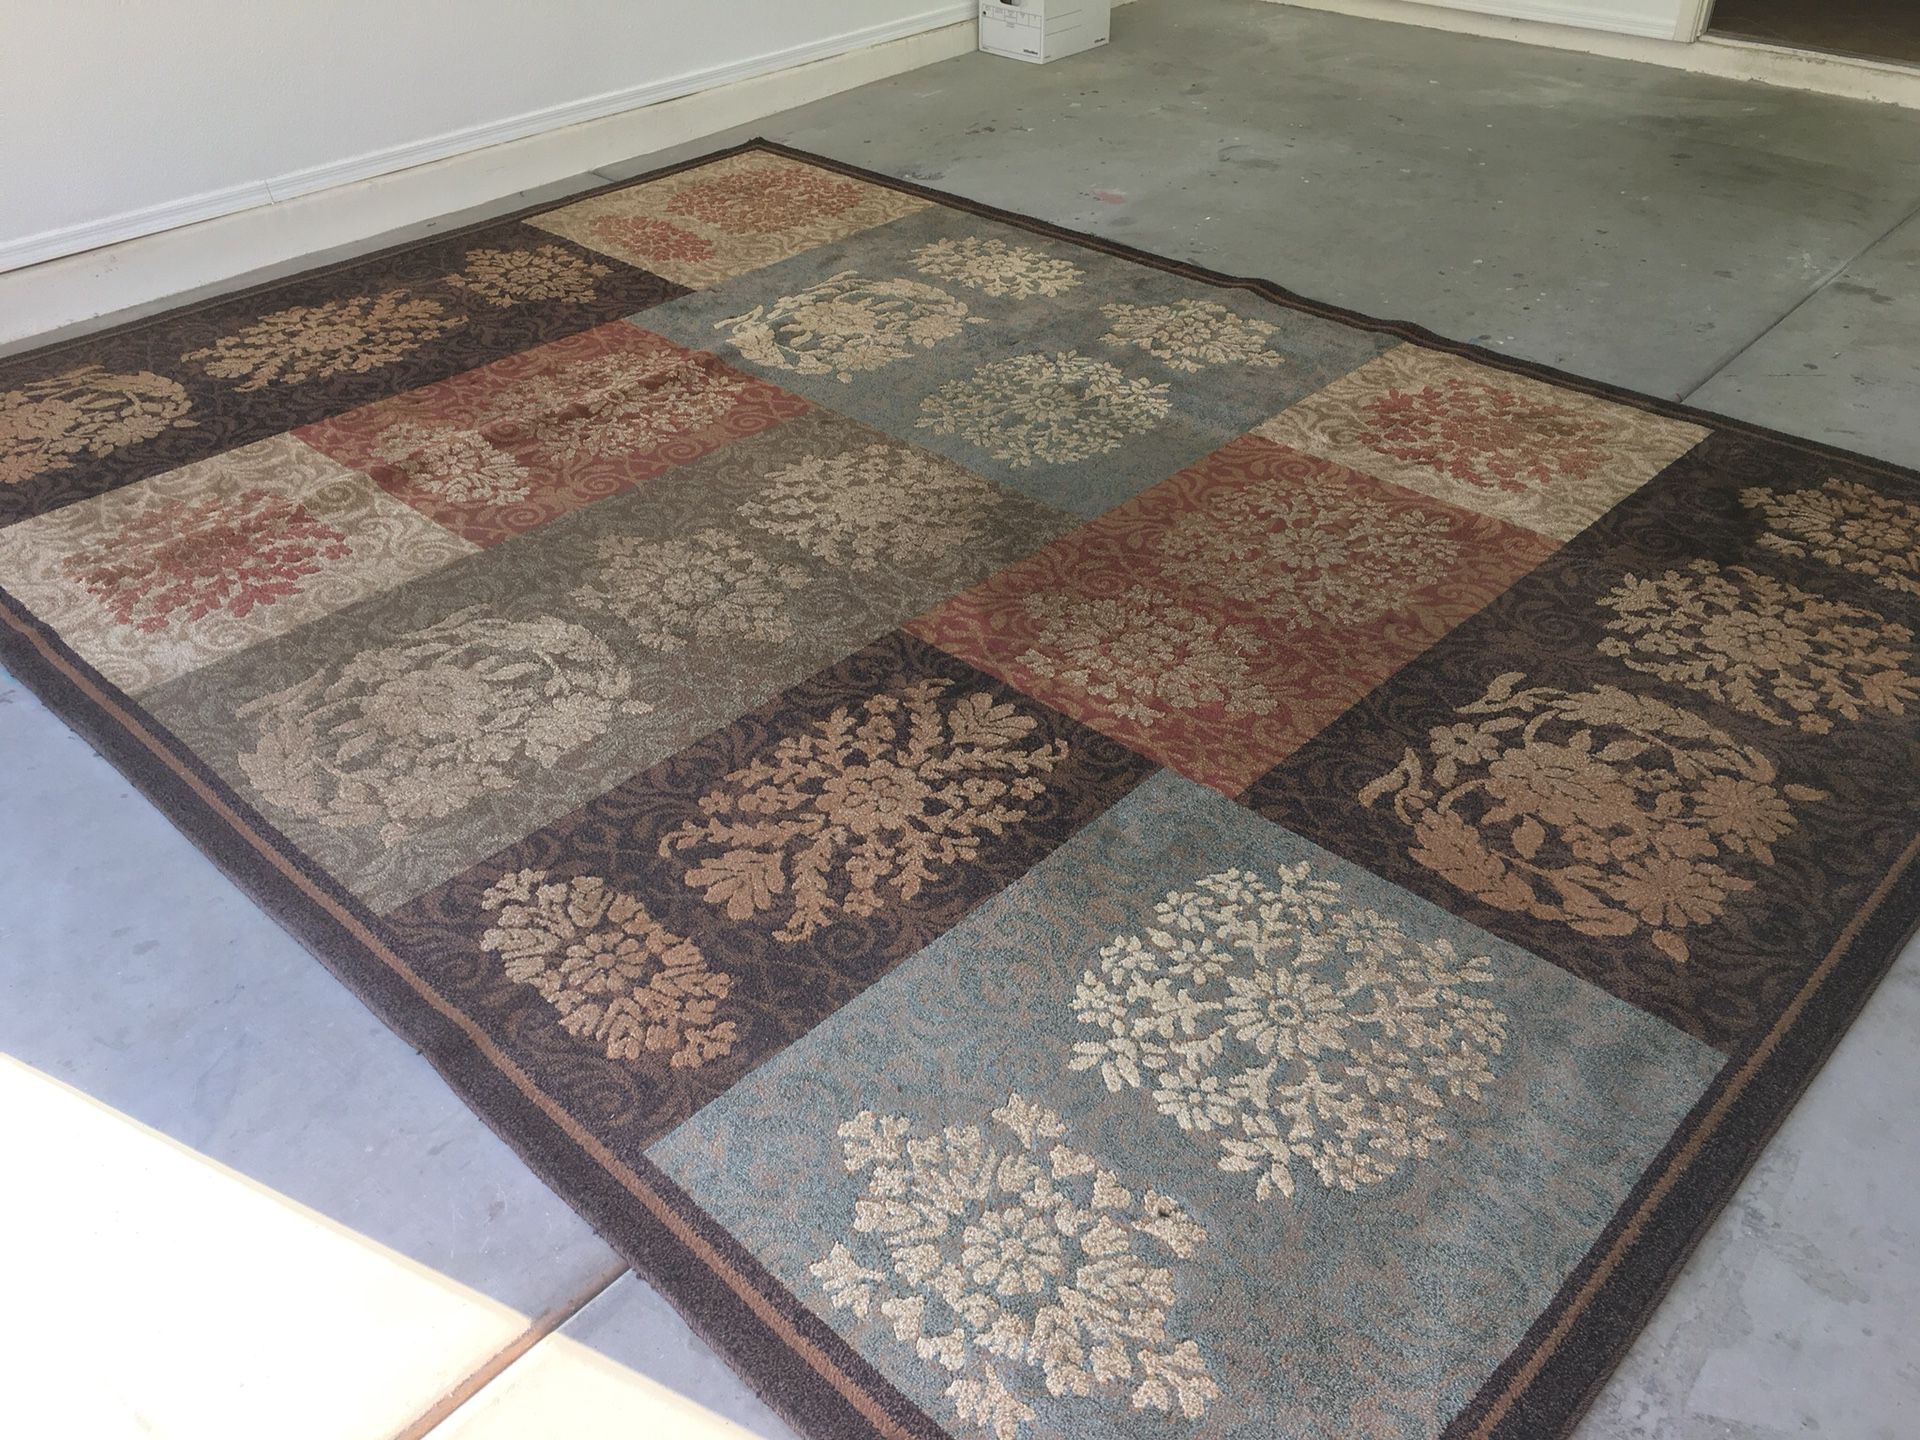 Rug, AREA rug, large throw rug, carpet